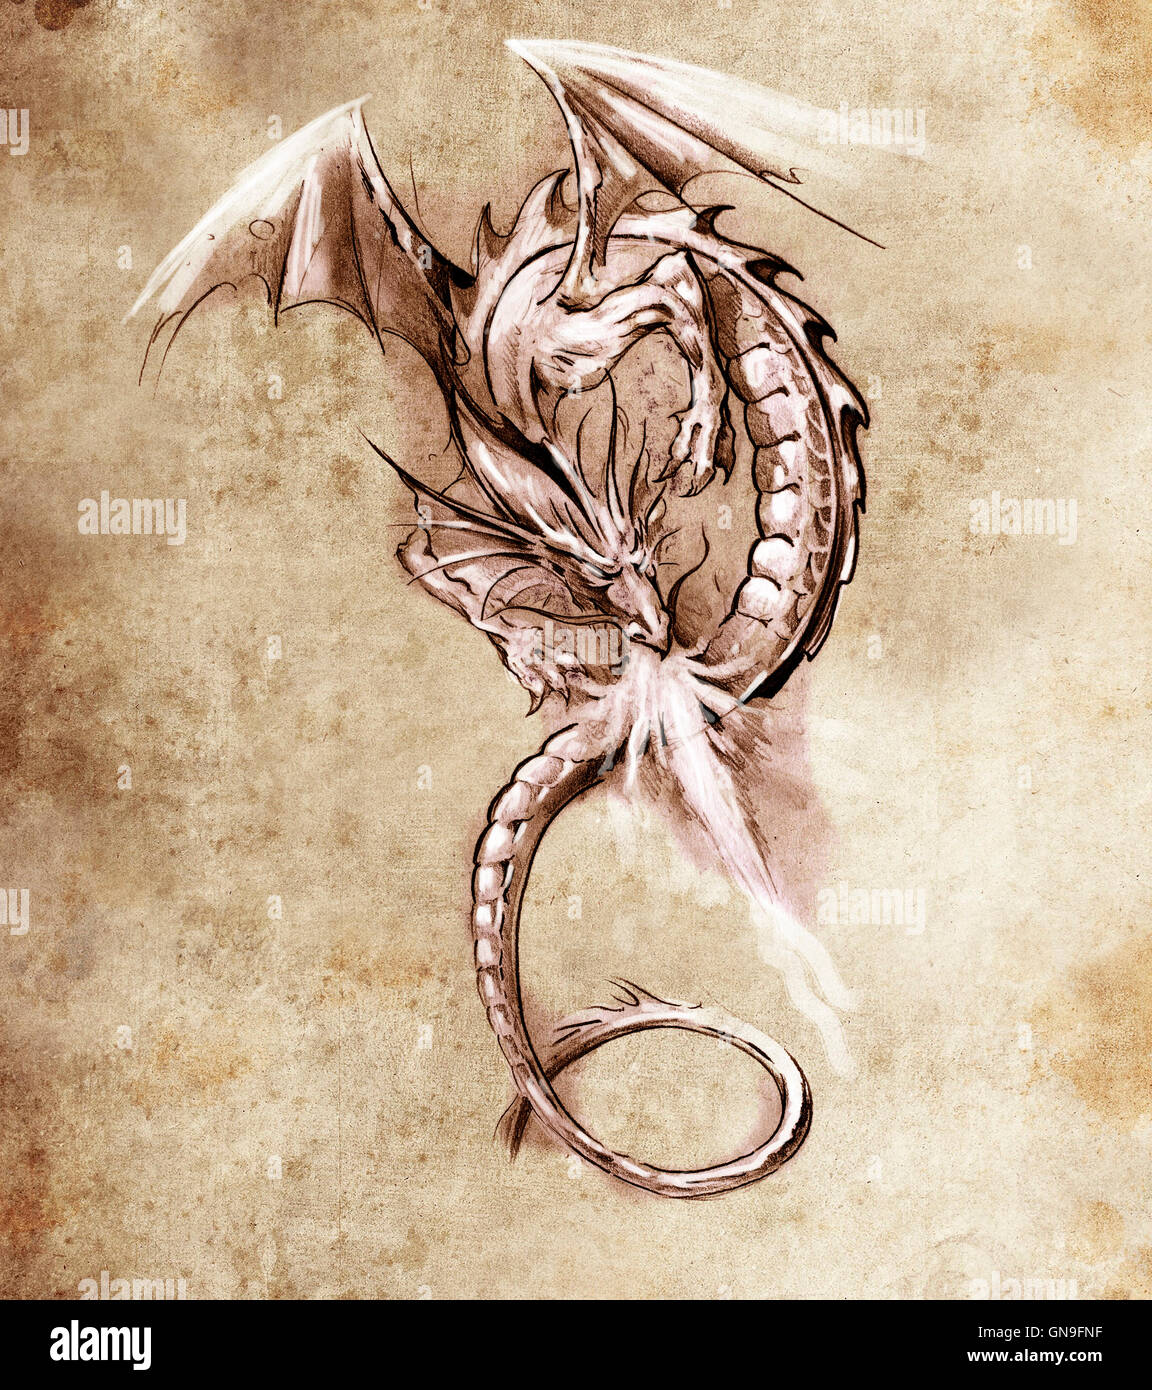 Chinese Dragon drawing